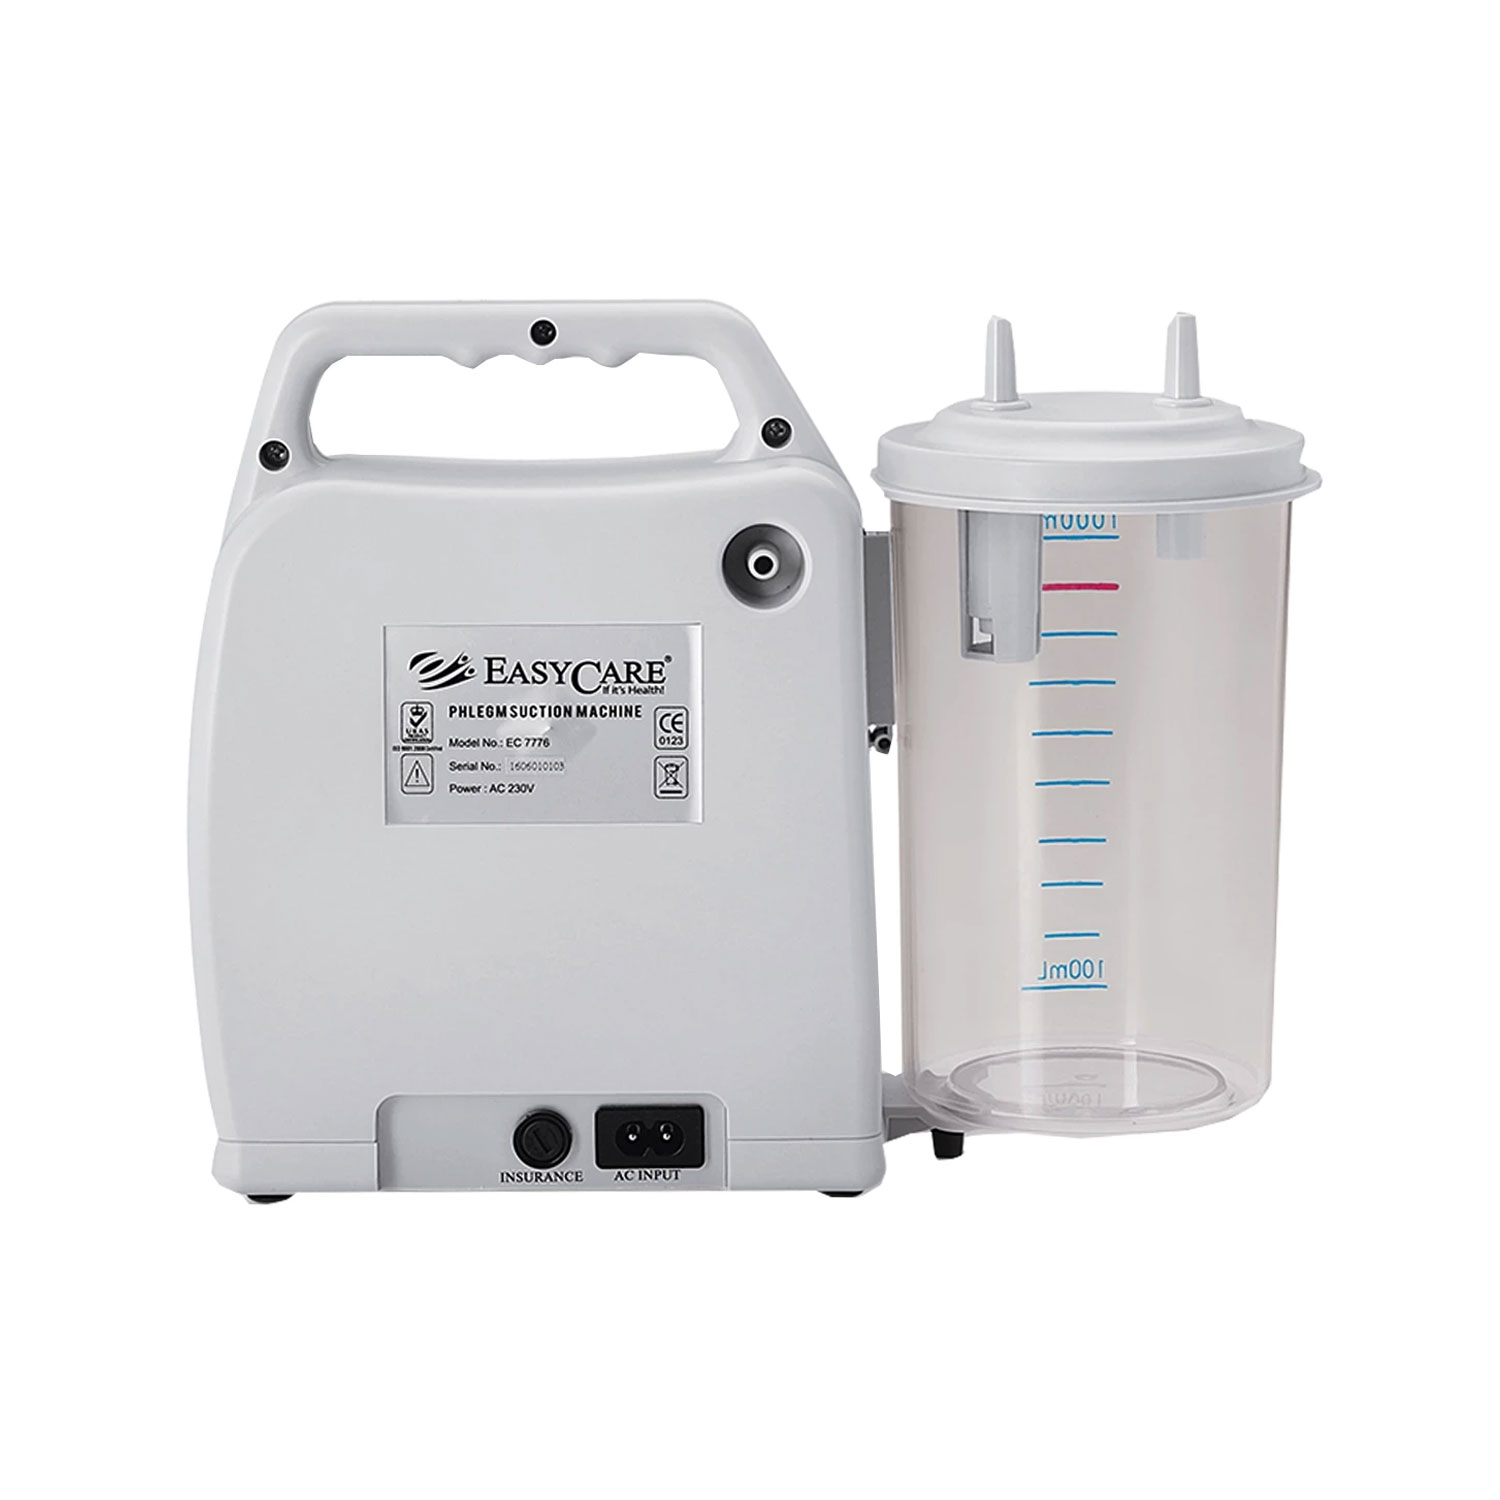 EcoVac-200 Portable Suction Pump - Homecare Equipment - Fu Kang Healthcare  Shop Online